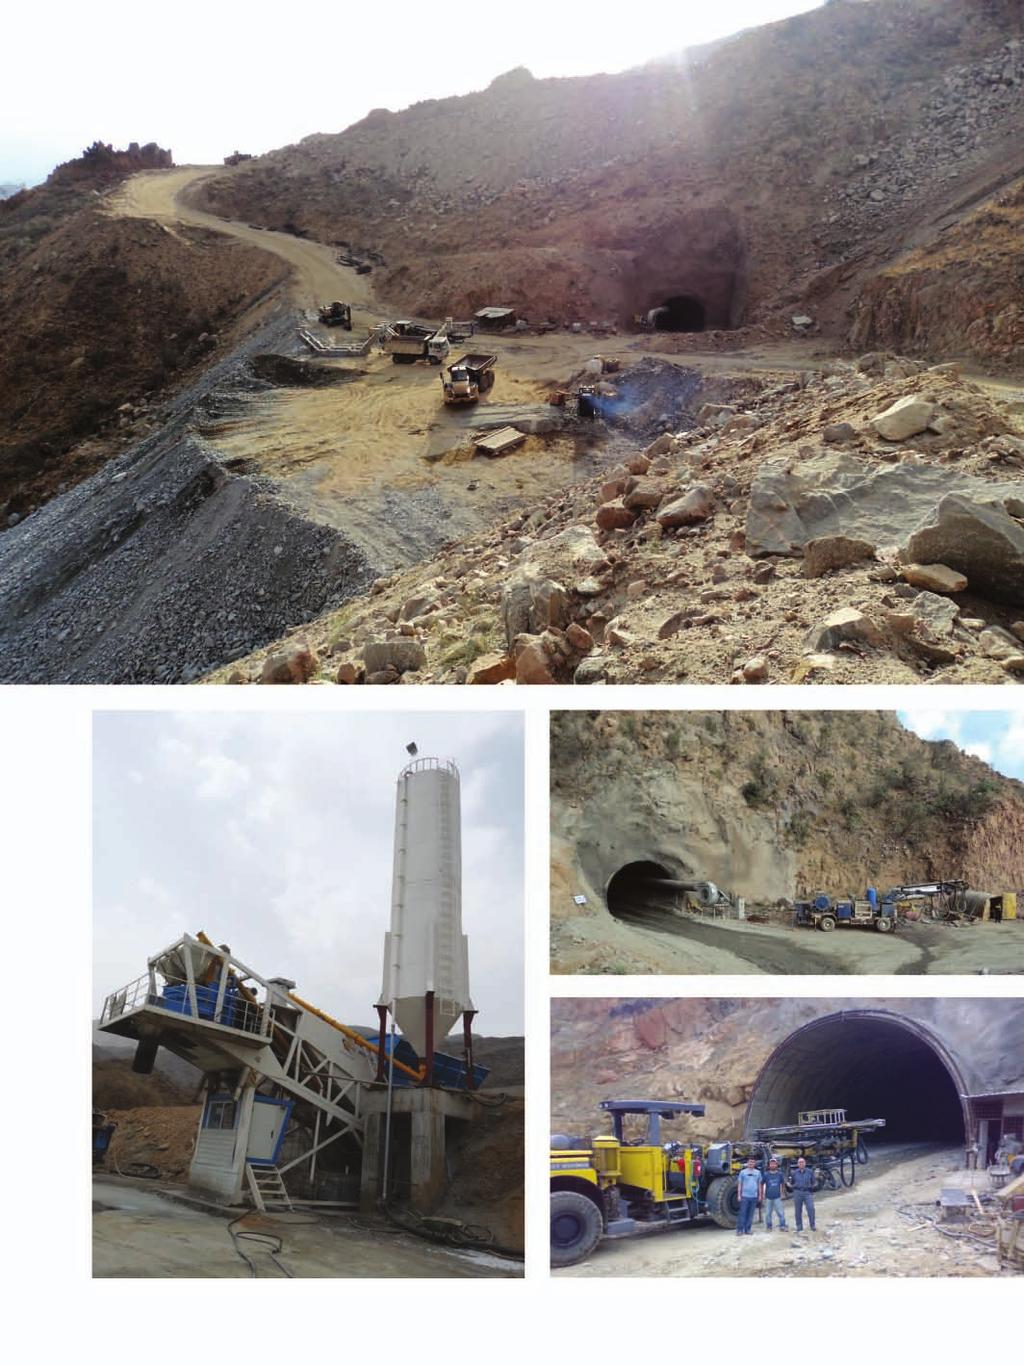 Shuqaiq - Abha Su Geçiş ve Servis Yolu Tünelleri